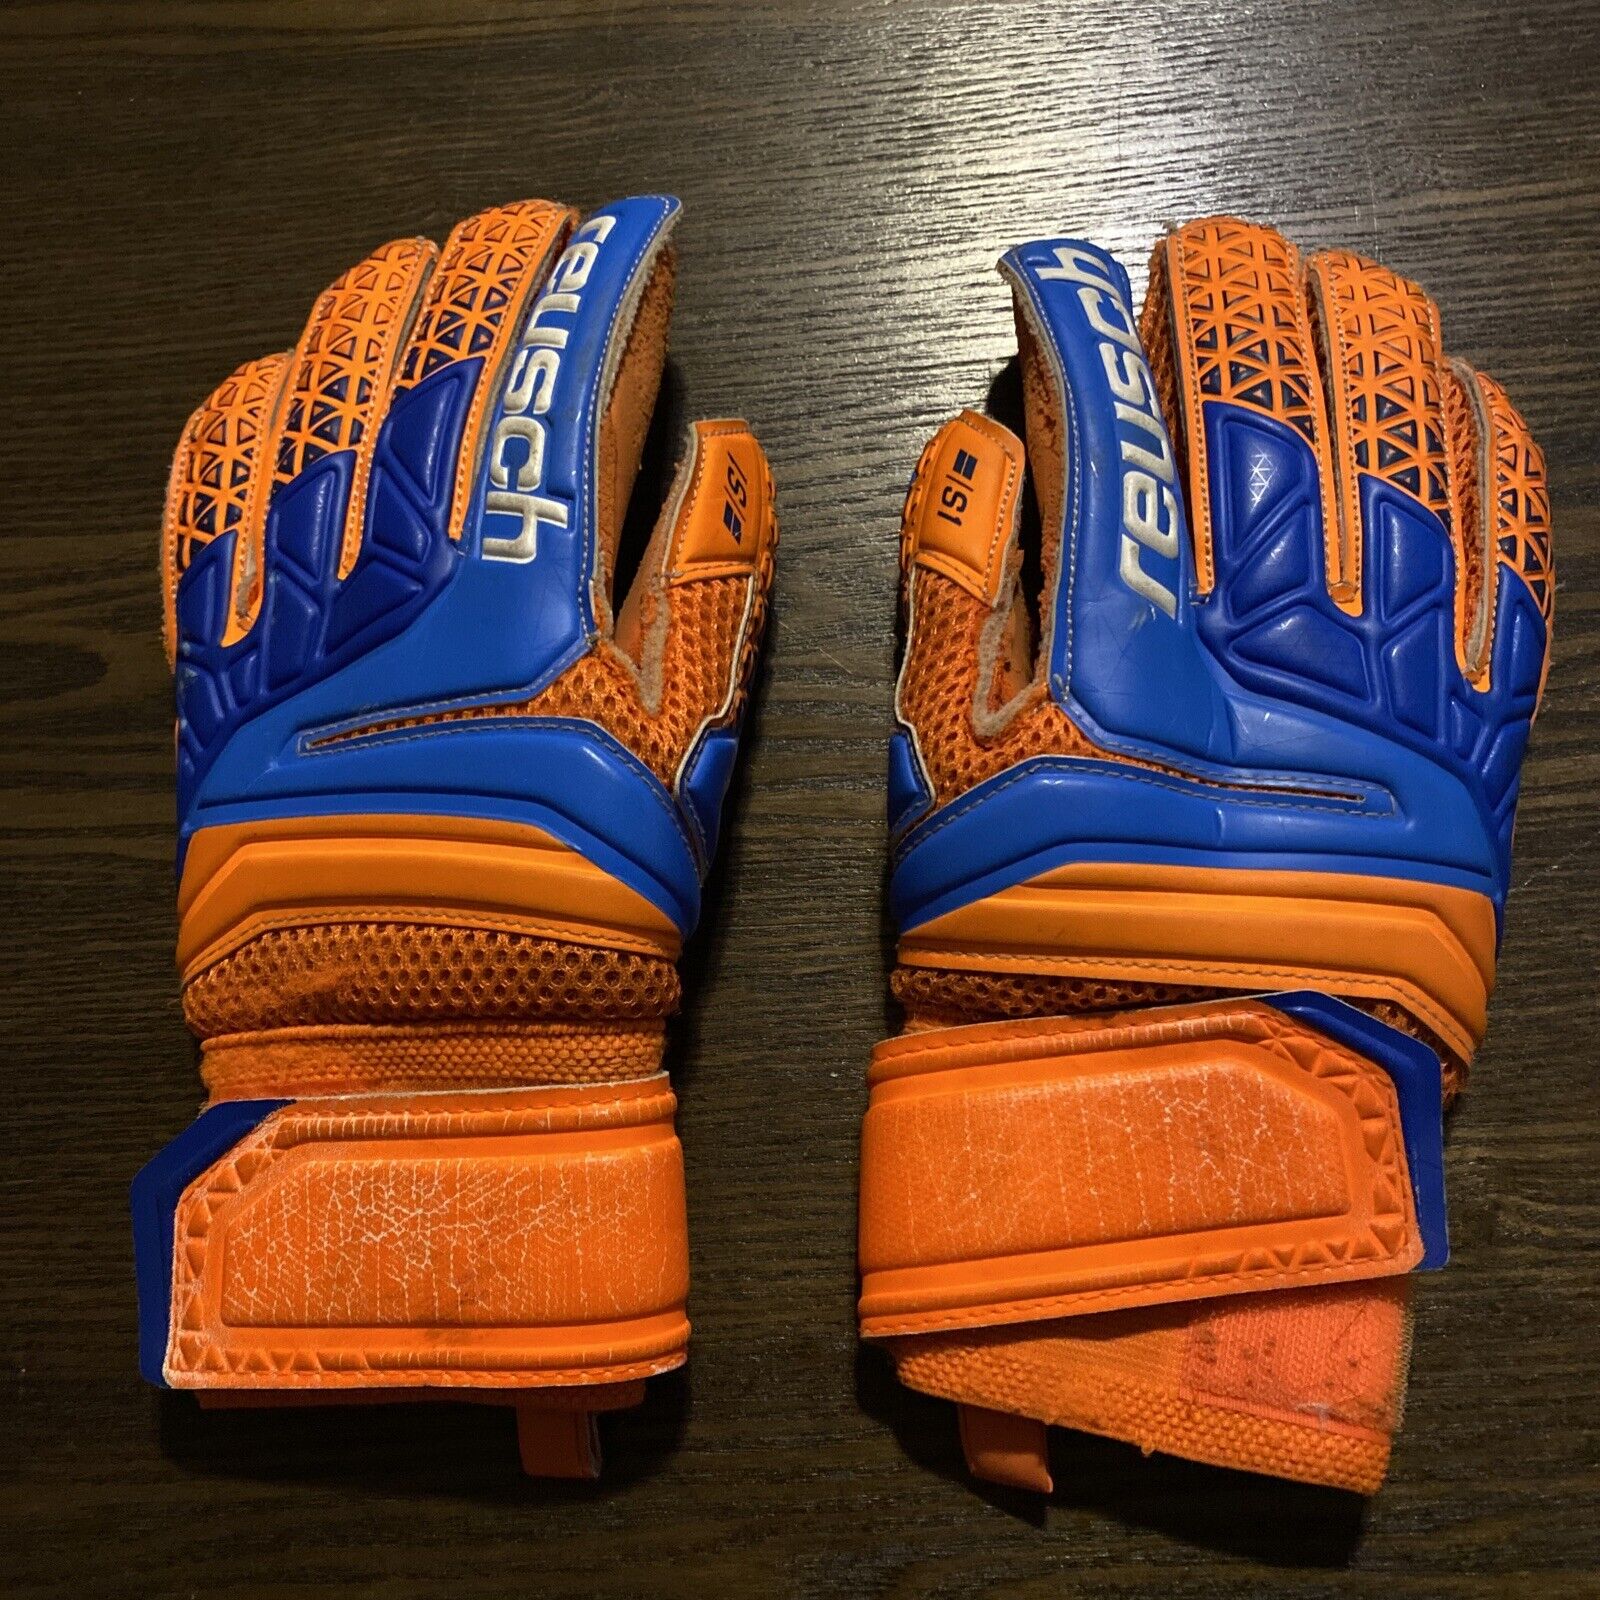 Reusch Prisma STF S1 Tec Gloves Used Size 8 | eBay